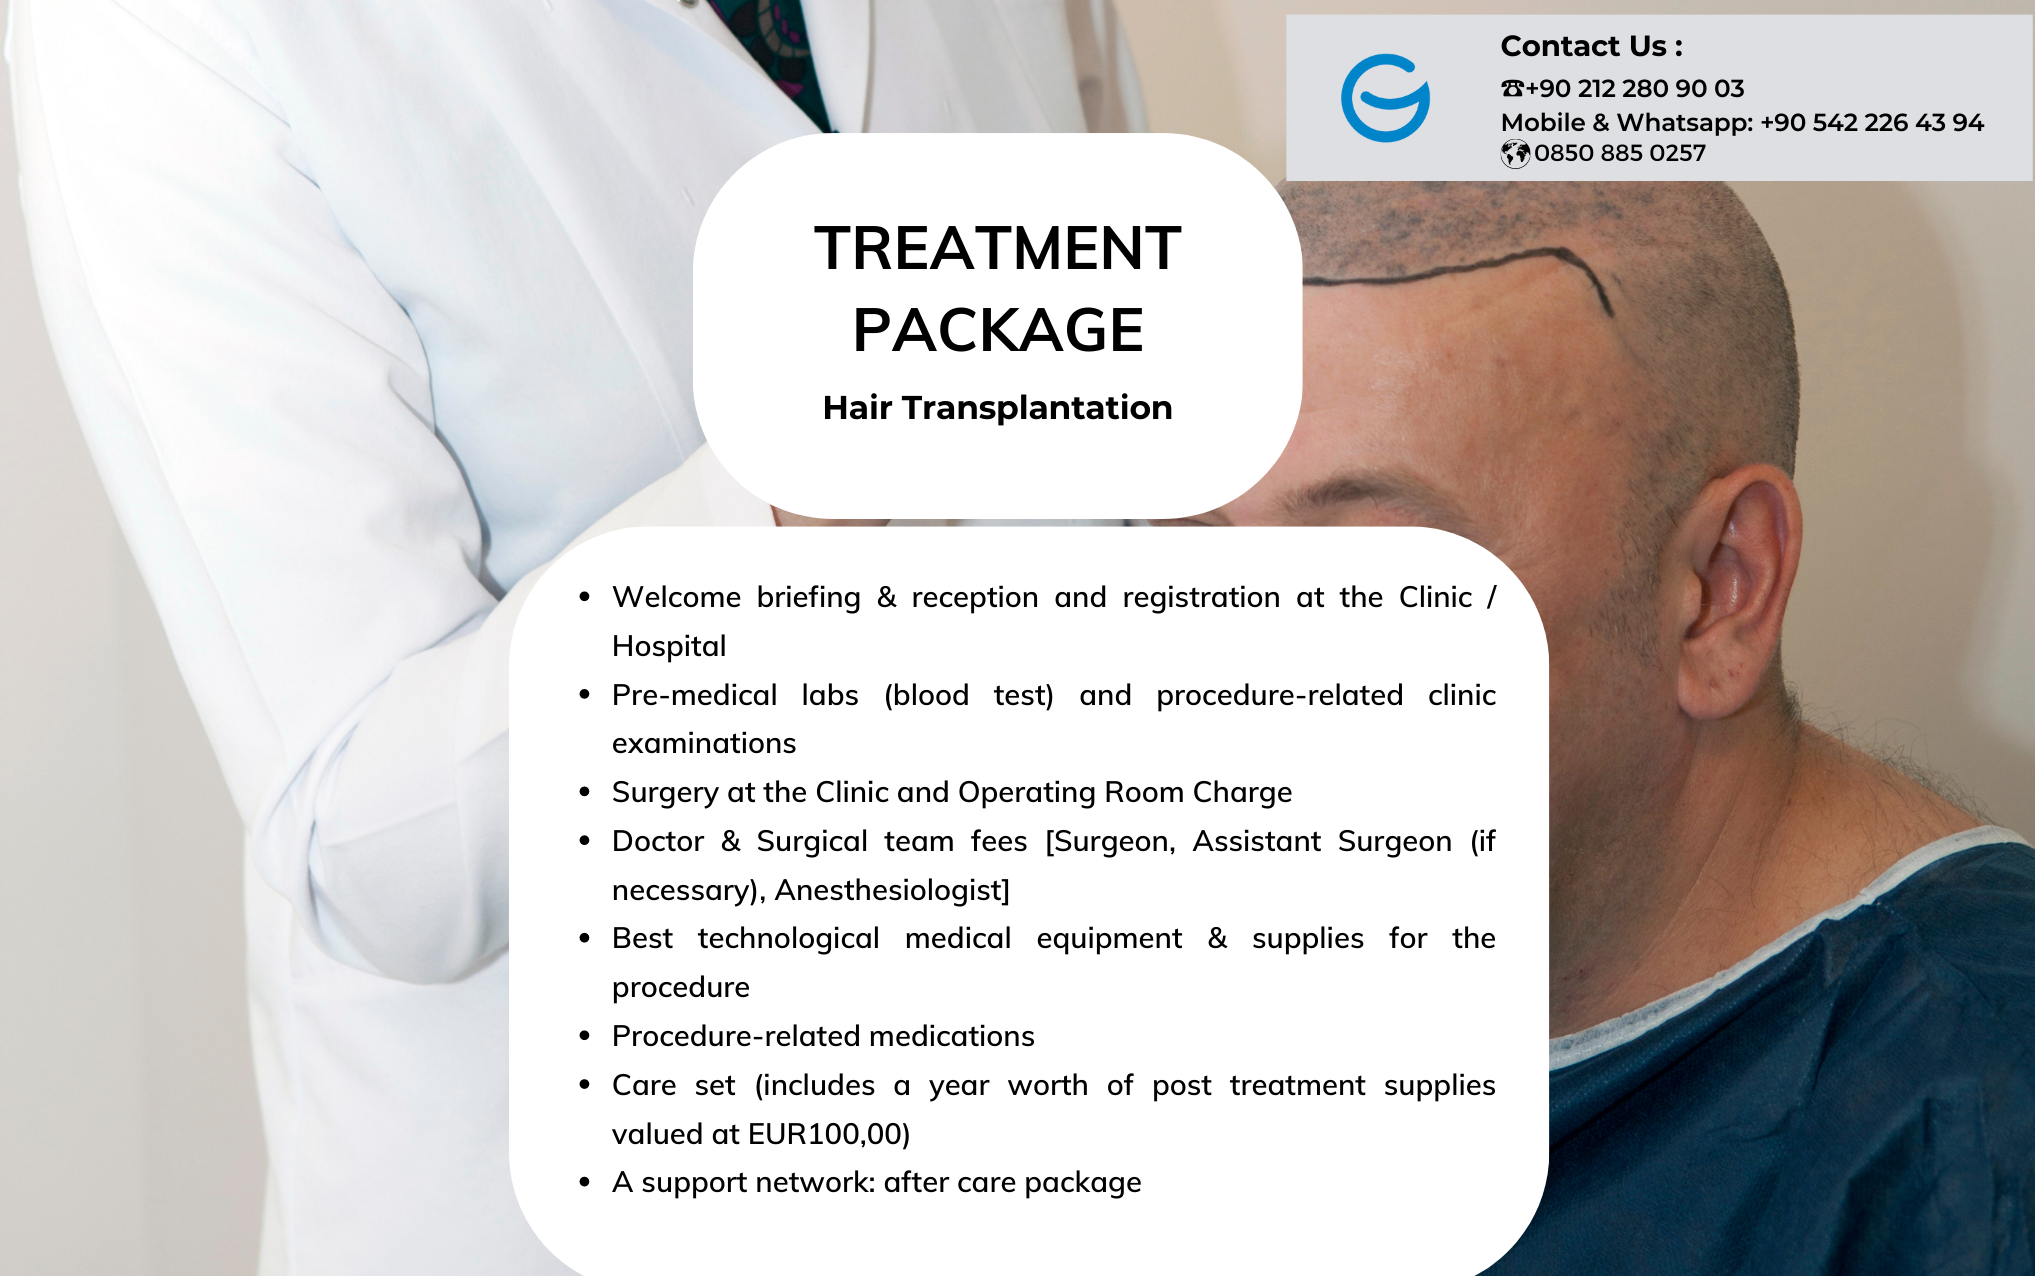 Hair Transplantation Treatment Package